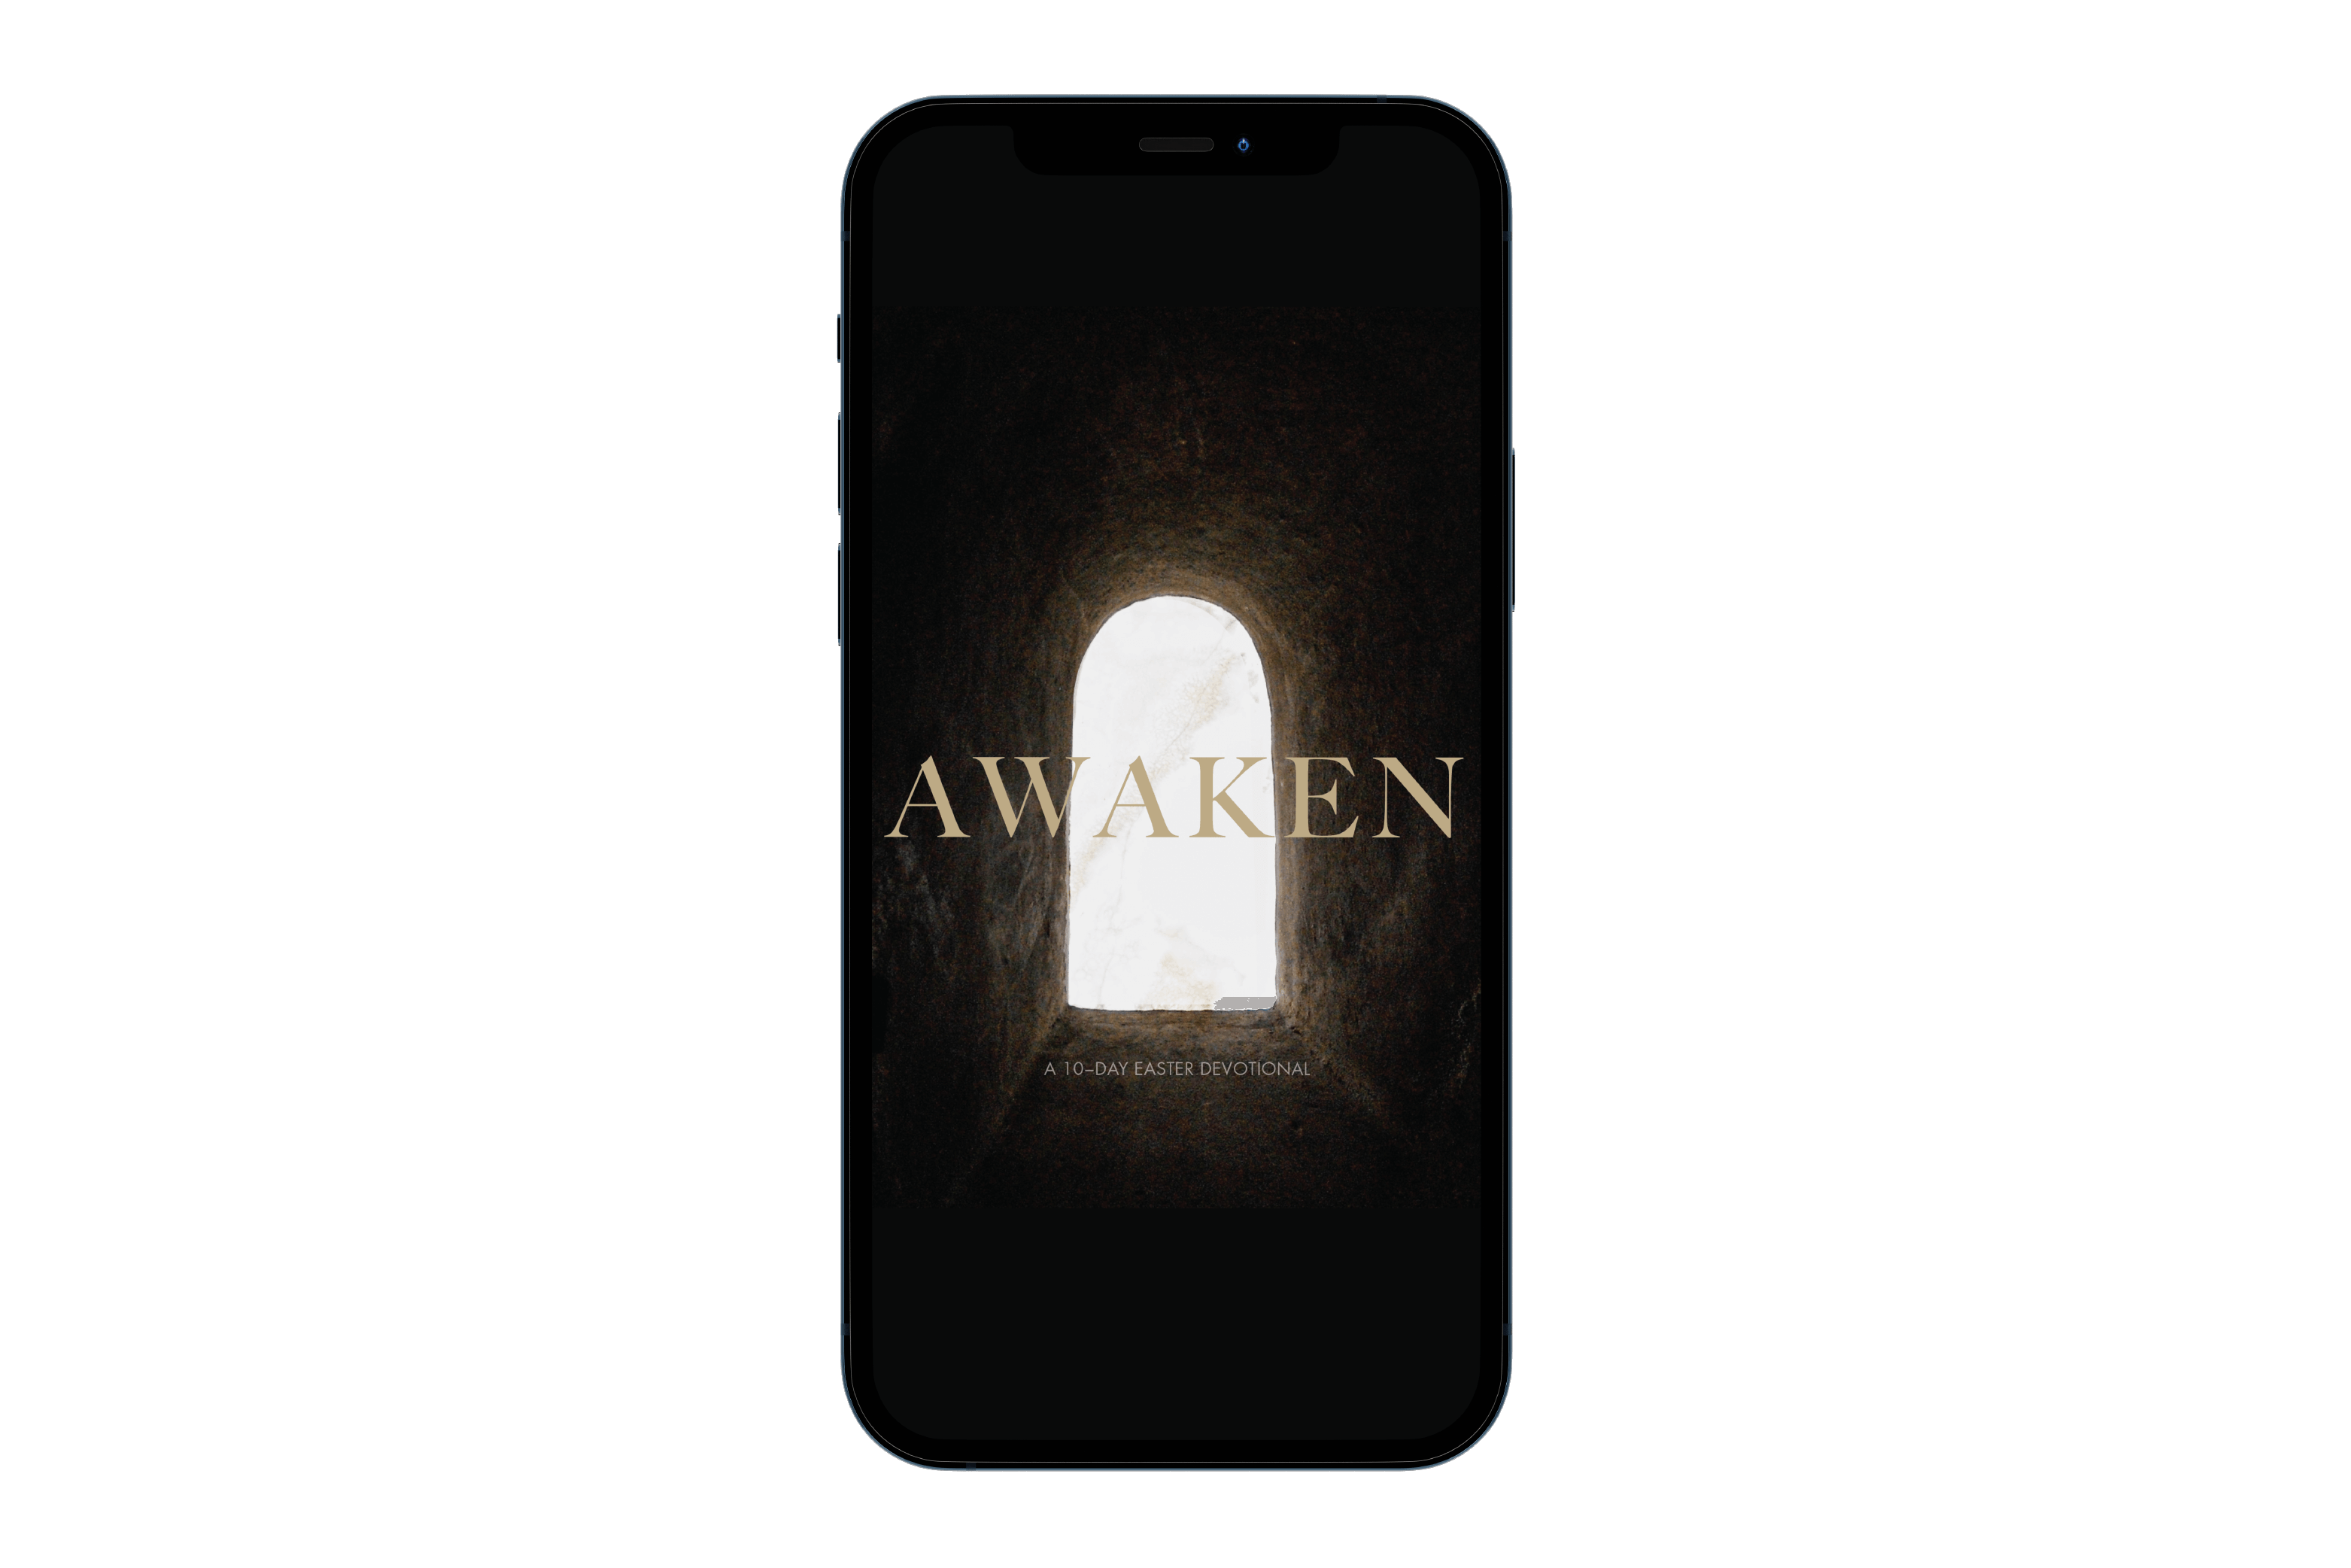 [DOWNLOADABLE VERSION] Awaken: A 10-Day Easter Devotional